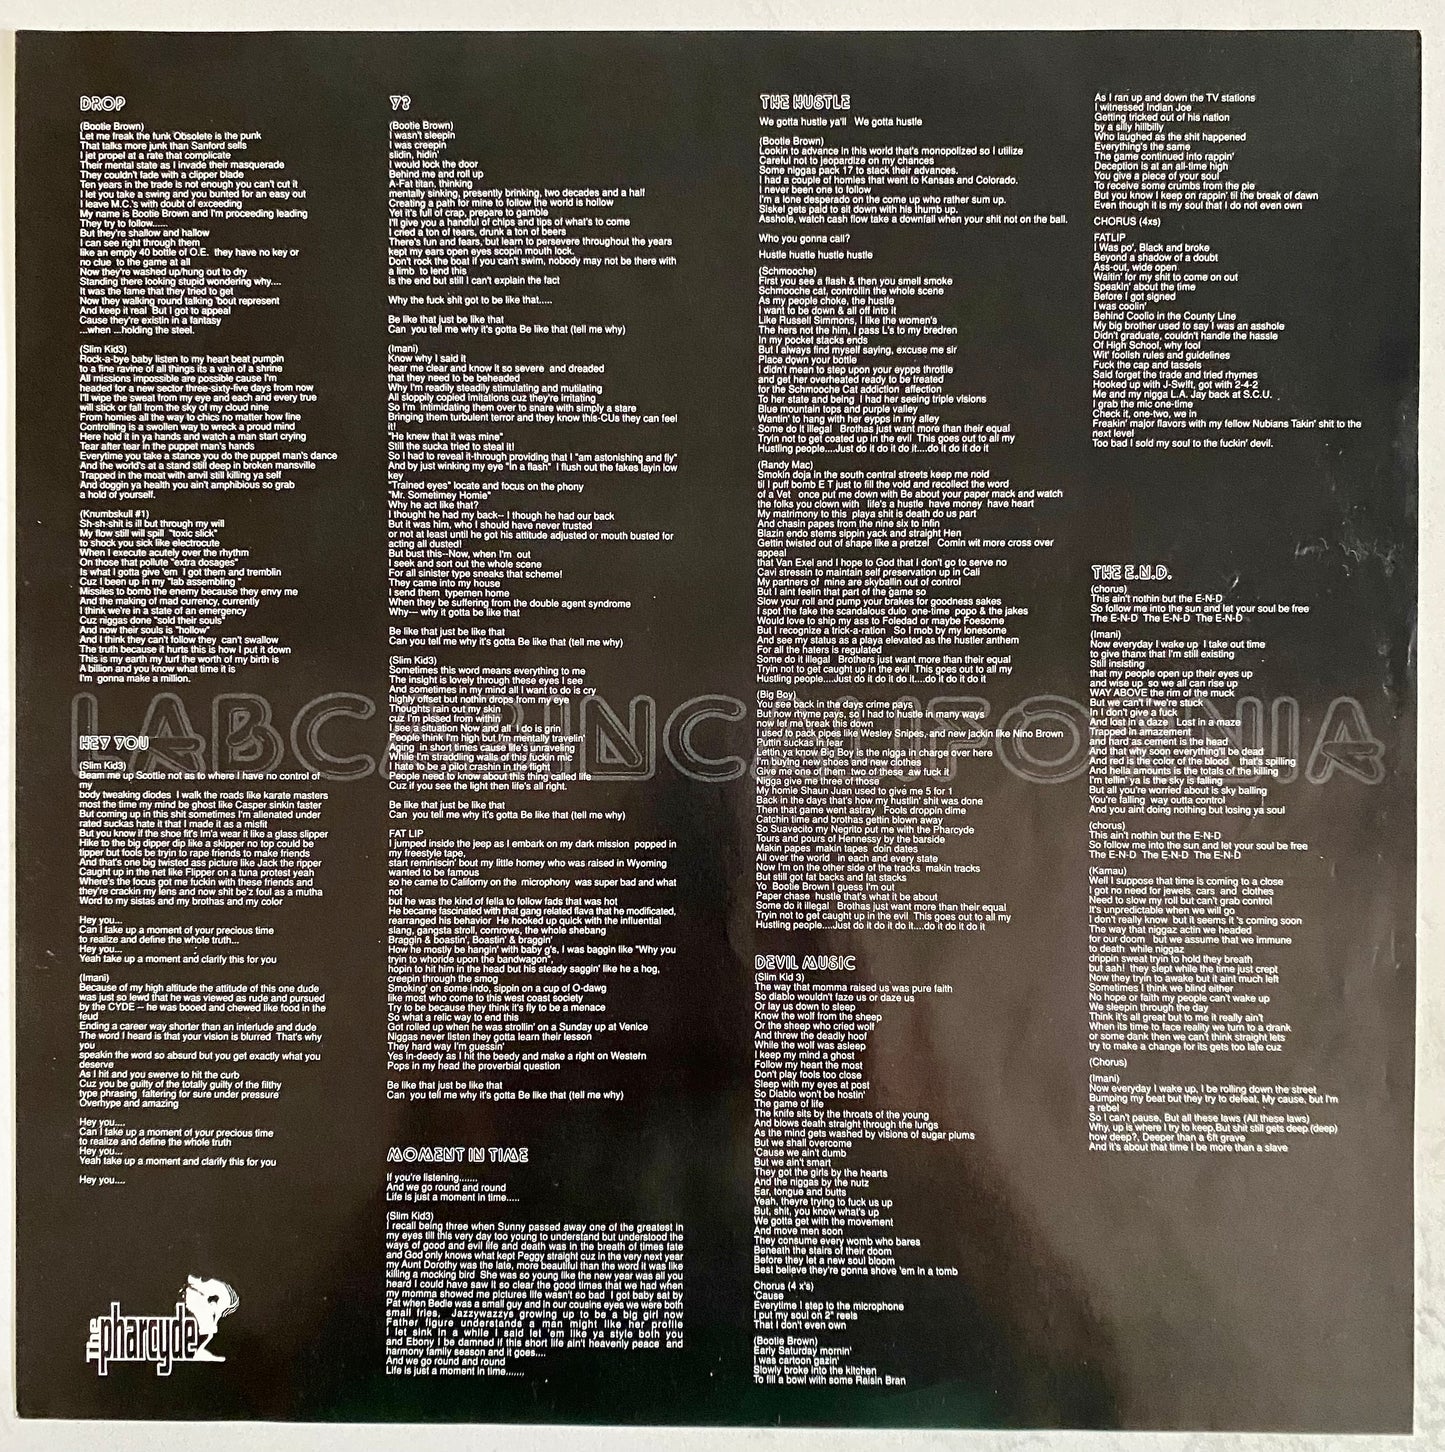 The Pharcyde - LabCabinCalifornia (2xLP, Album, Gat). HIP-HOP